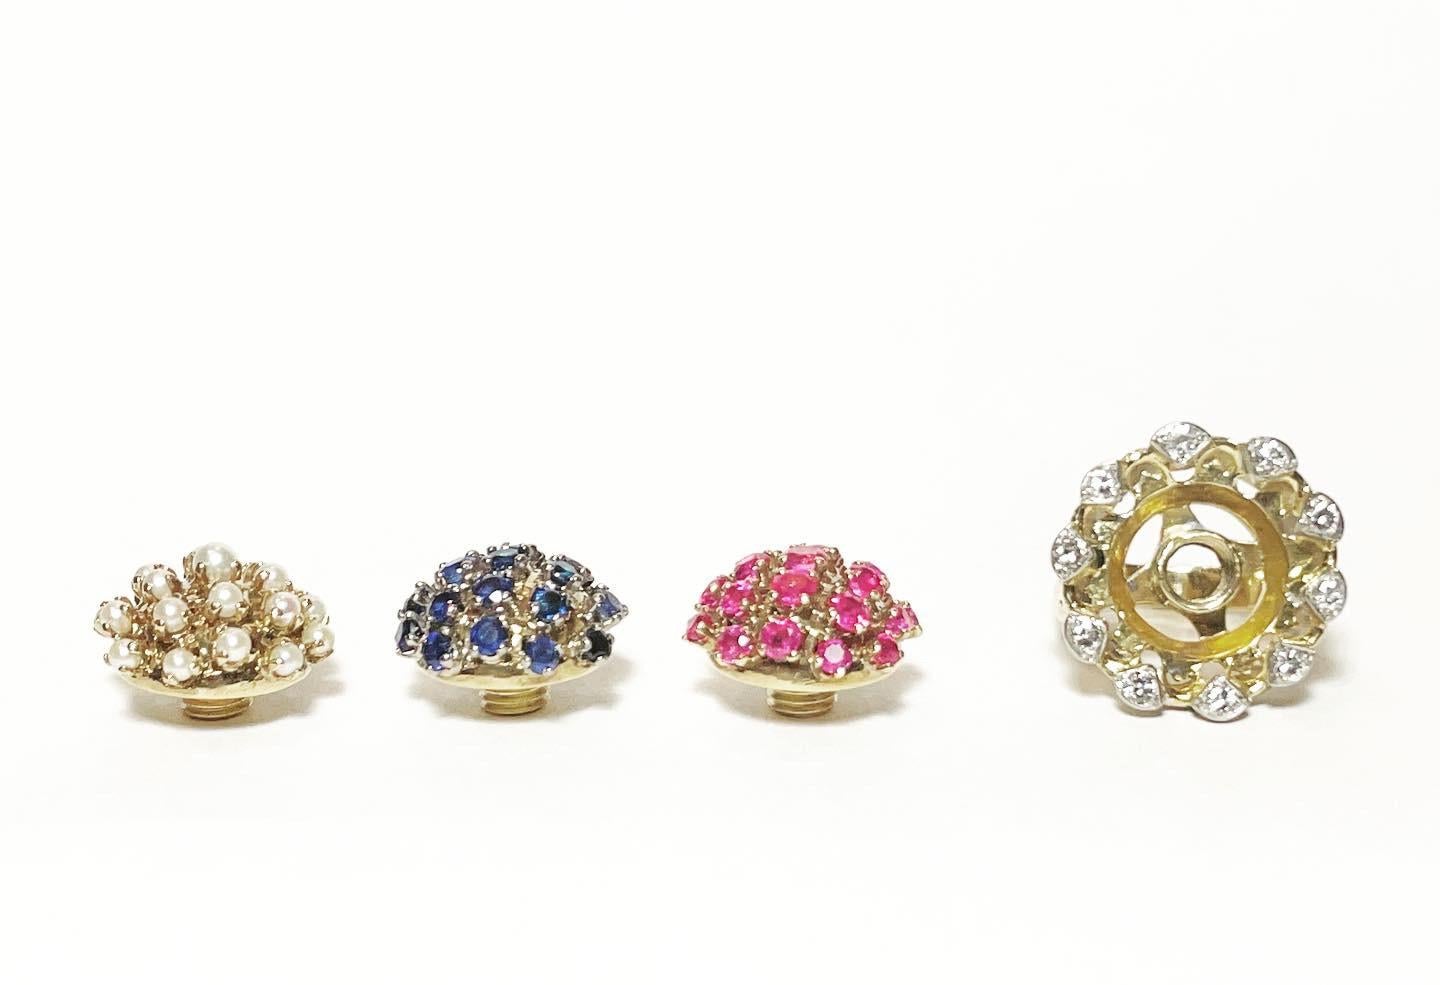 Retro 1950s Interchangeable 18kt Gold, Diamond, Pearls, Ruby, Sapphire Fashion Ring